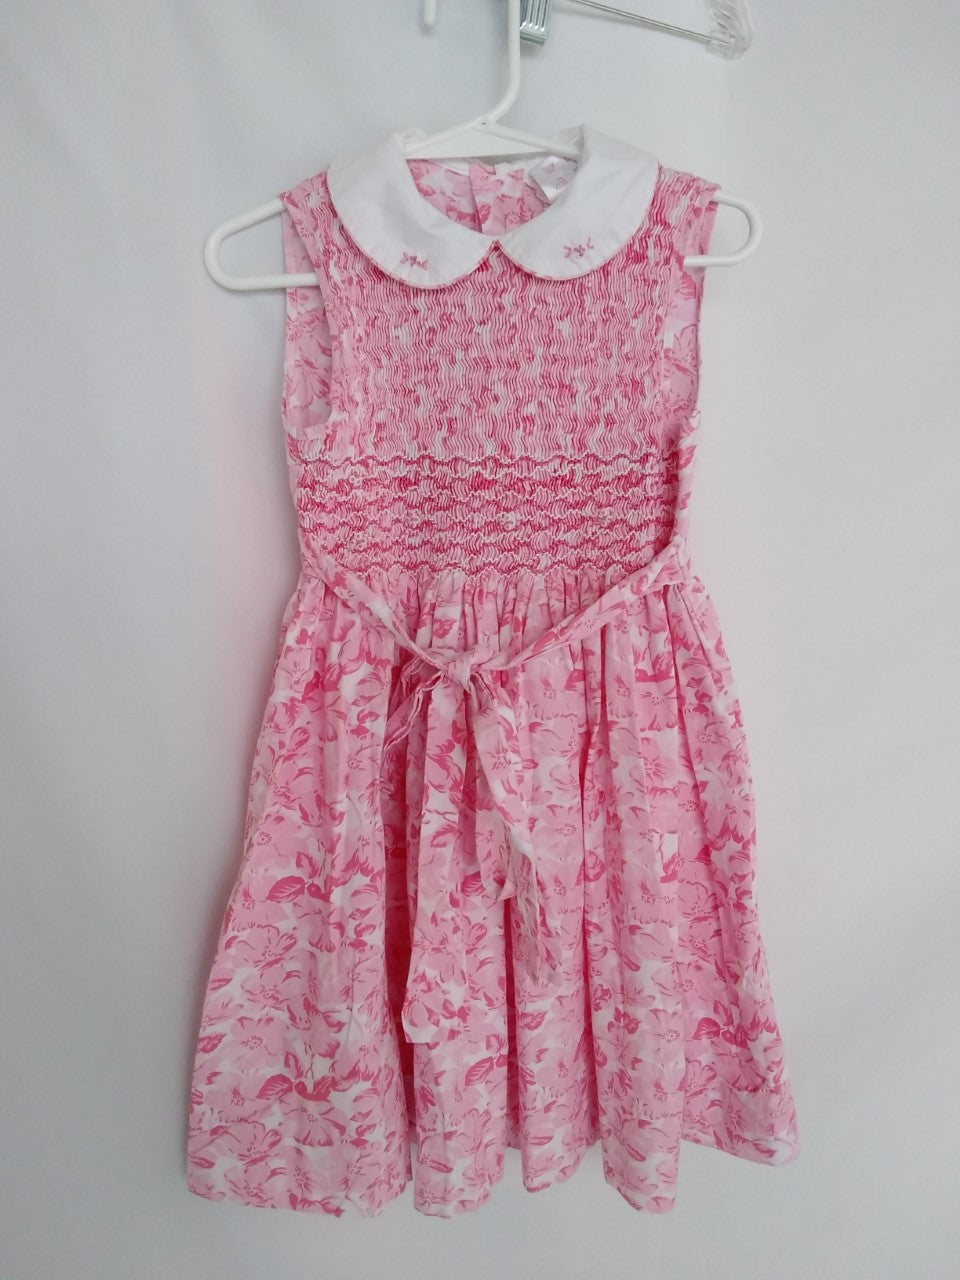 Vintage Sophie Dess Pink and White Sleeveless Seersucker Dress - 3yr